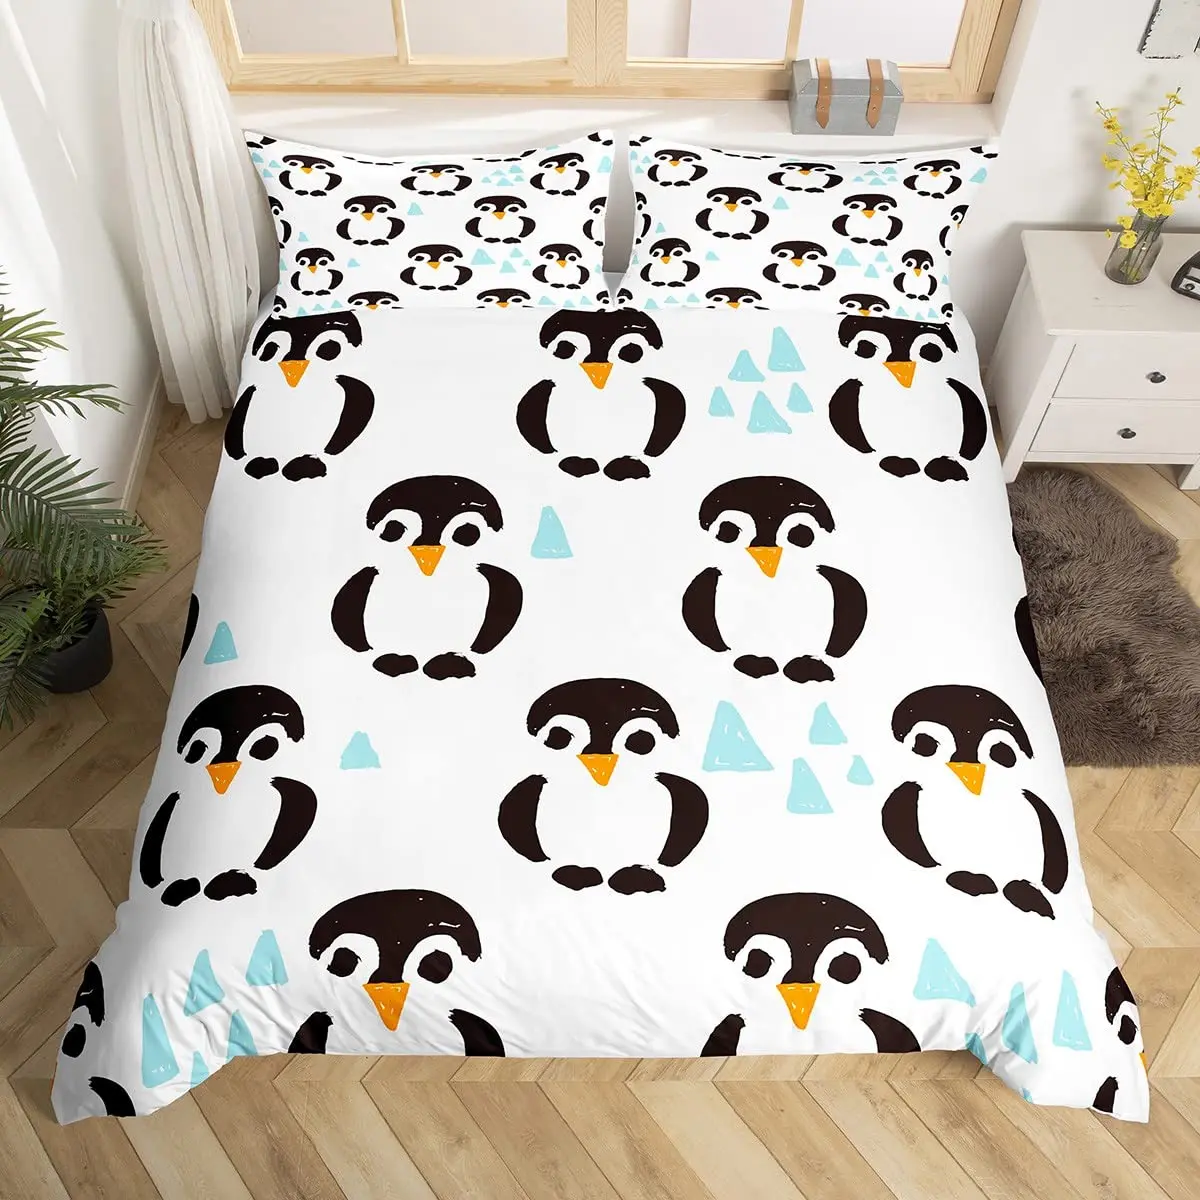 

Penguin Duvet Cover King/Queen Size,Cartoon Antarctic Animal Comforter Cover White 2/3pcs Polyester Quilt Cover for Kids Boys